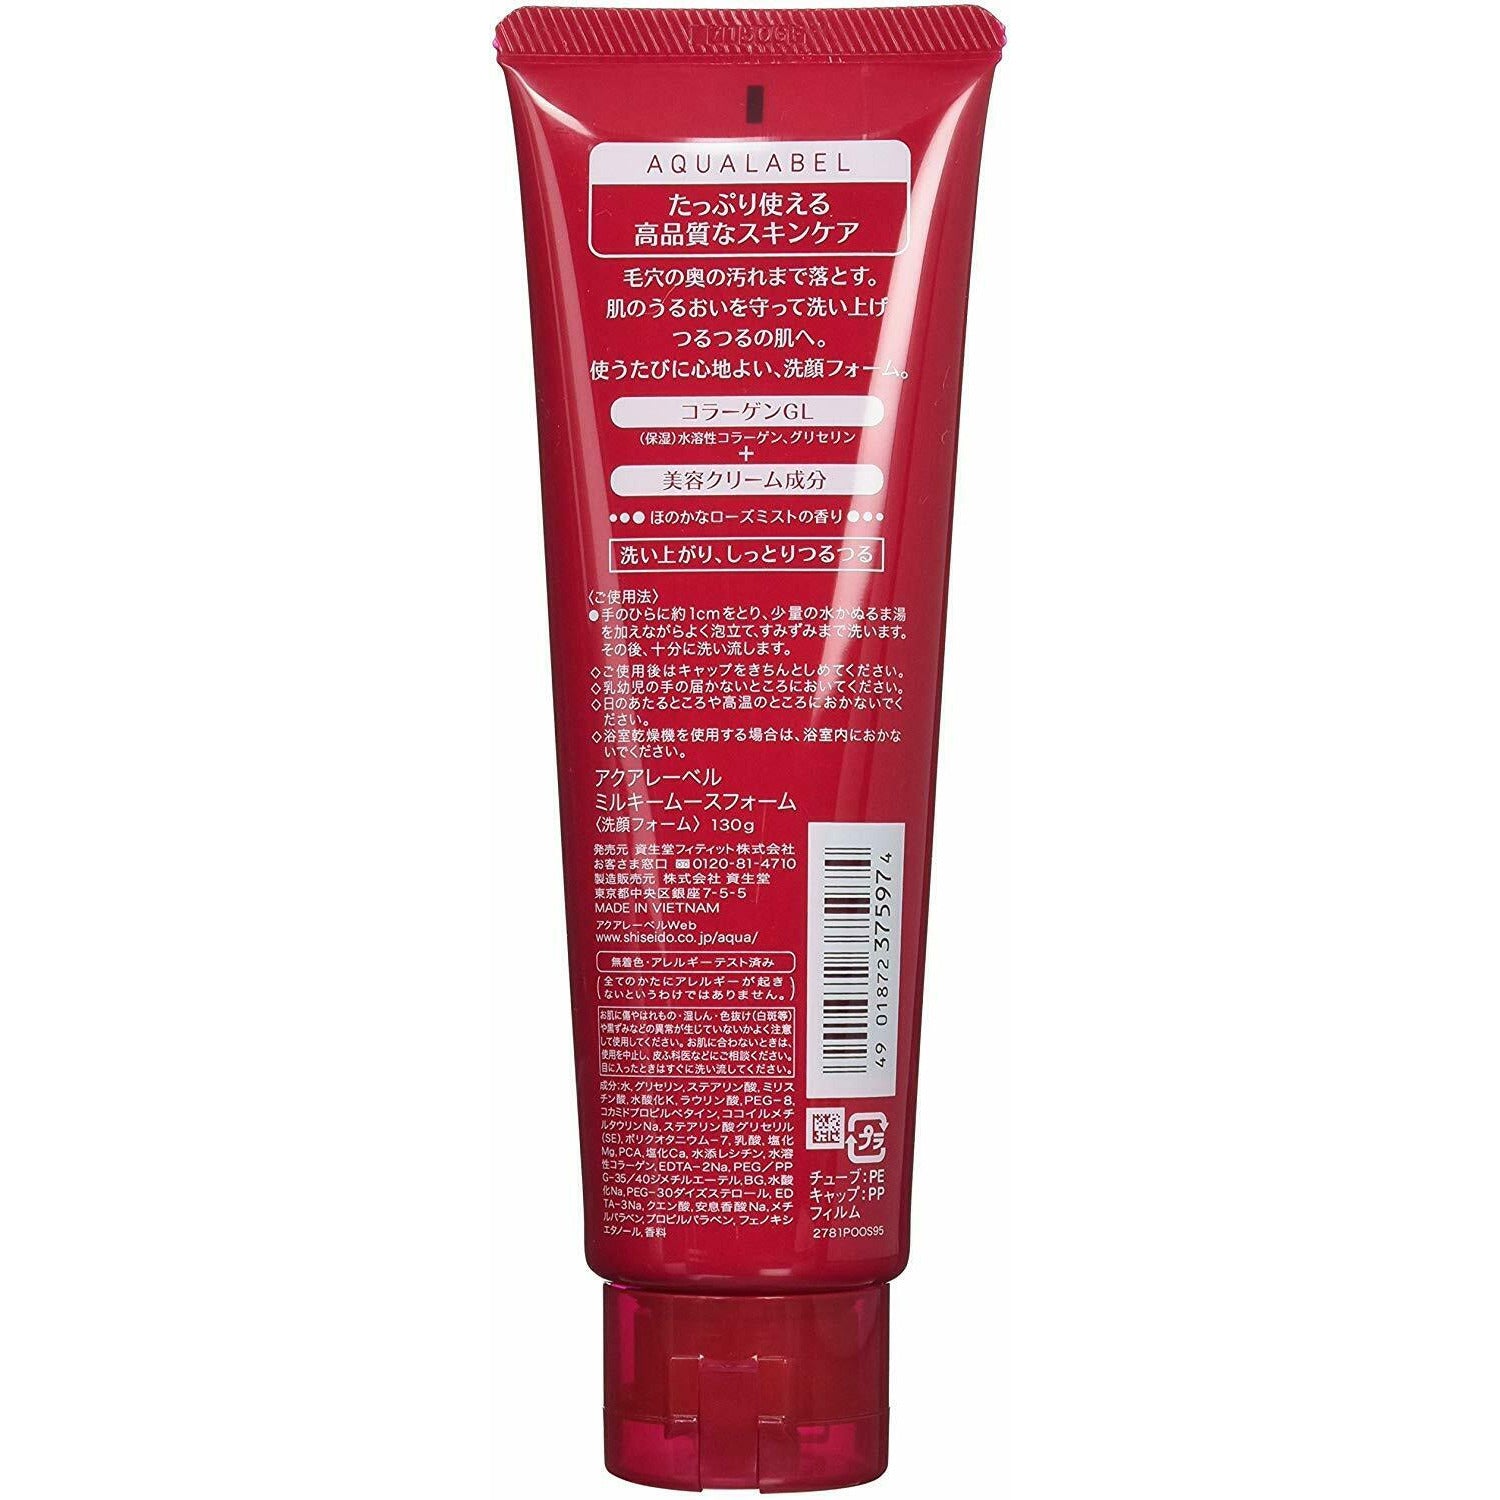 SHISEIDO Aqua Label Face Wash Cleanser Milky Mousse Form 130g Skin Care